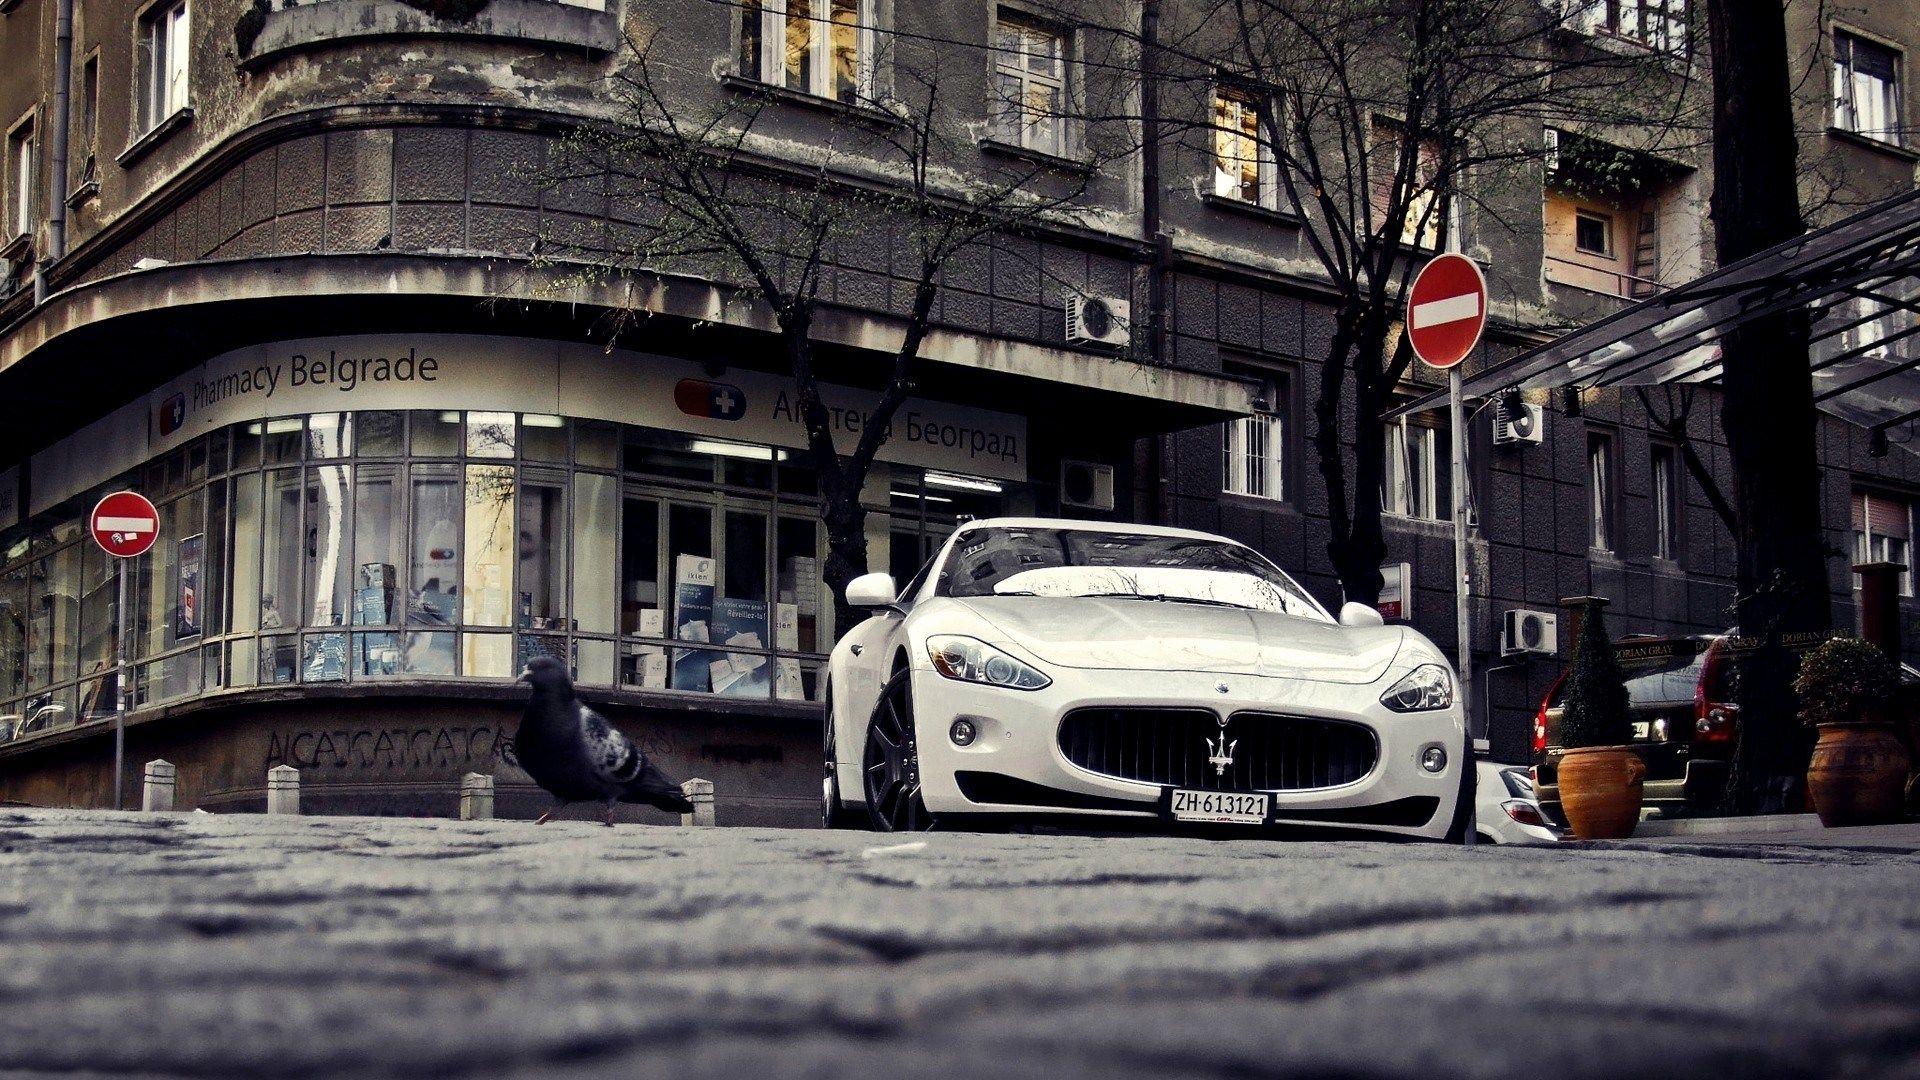 Awesome Maserati Image HD Wallpaper Free Download